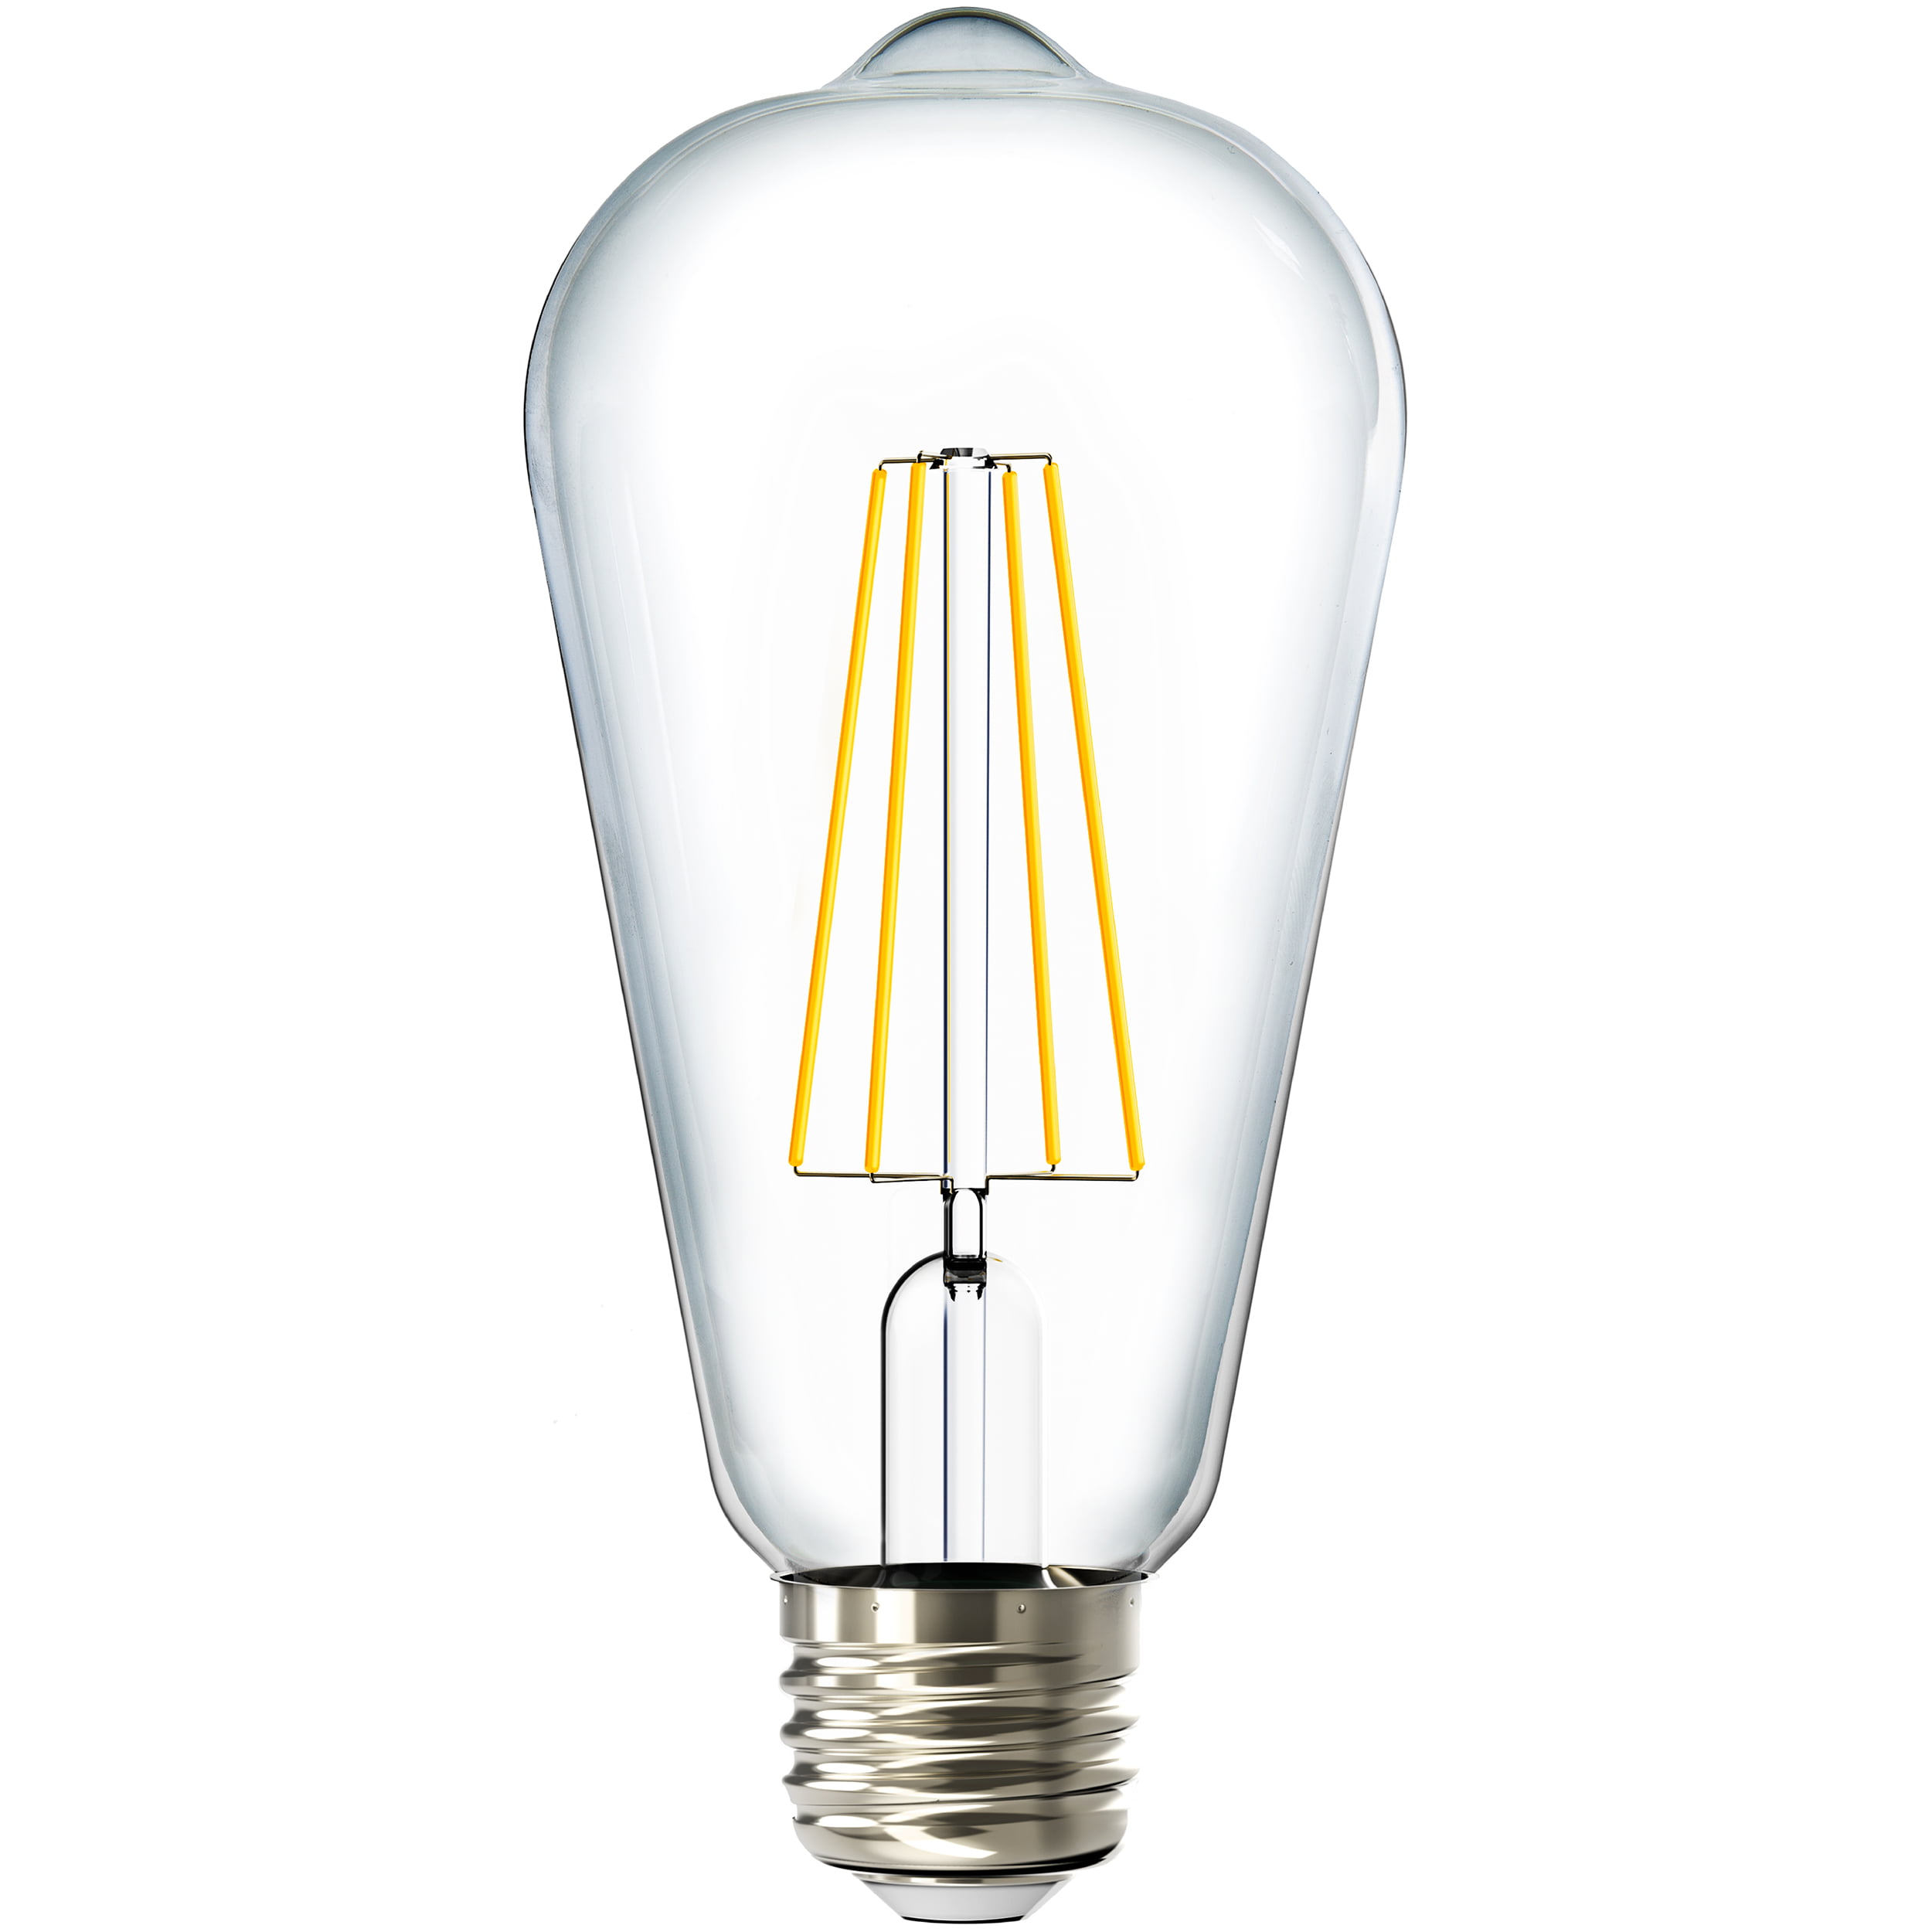 UL E26 Base 800 LM Sunco Lighting 10 Pack ST64 LED Bulb 6000K Daylight Deluxe Waterproof Vintage Edison Filament Bulb Dimmable 8.5W=60W Restauarant or String Lights